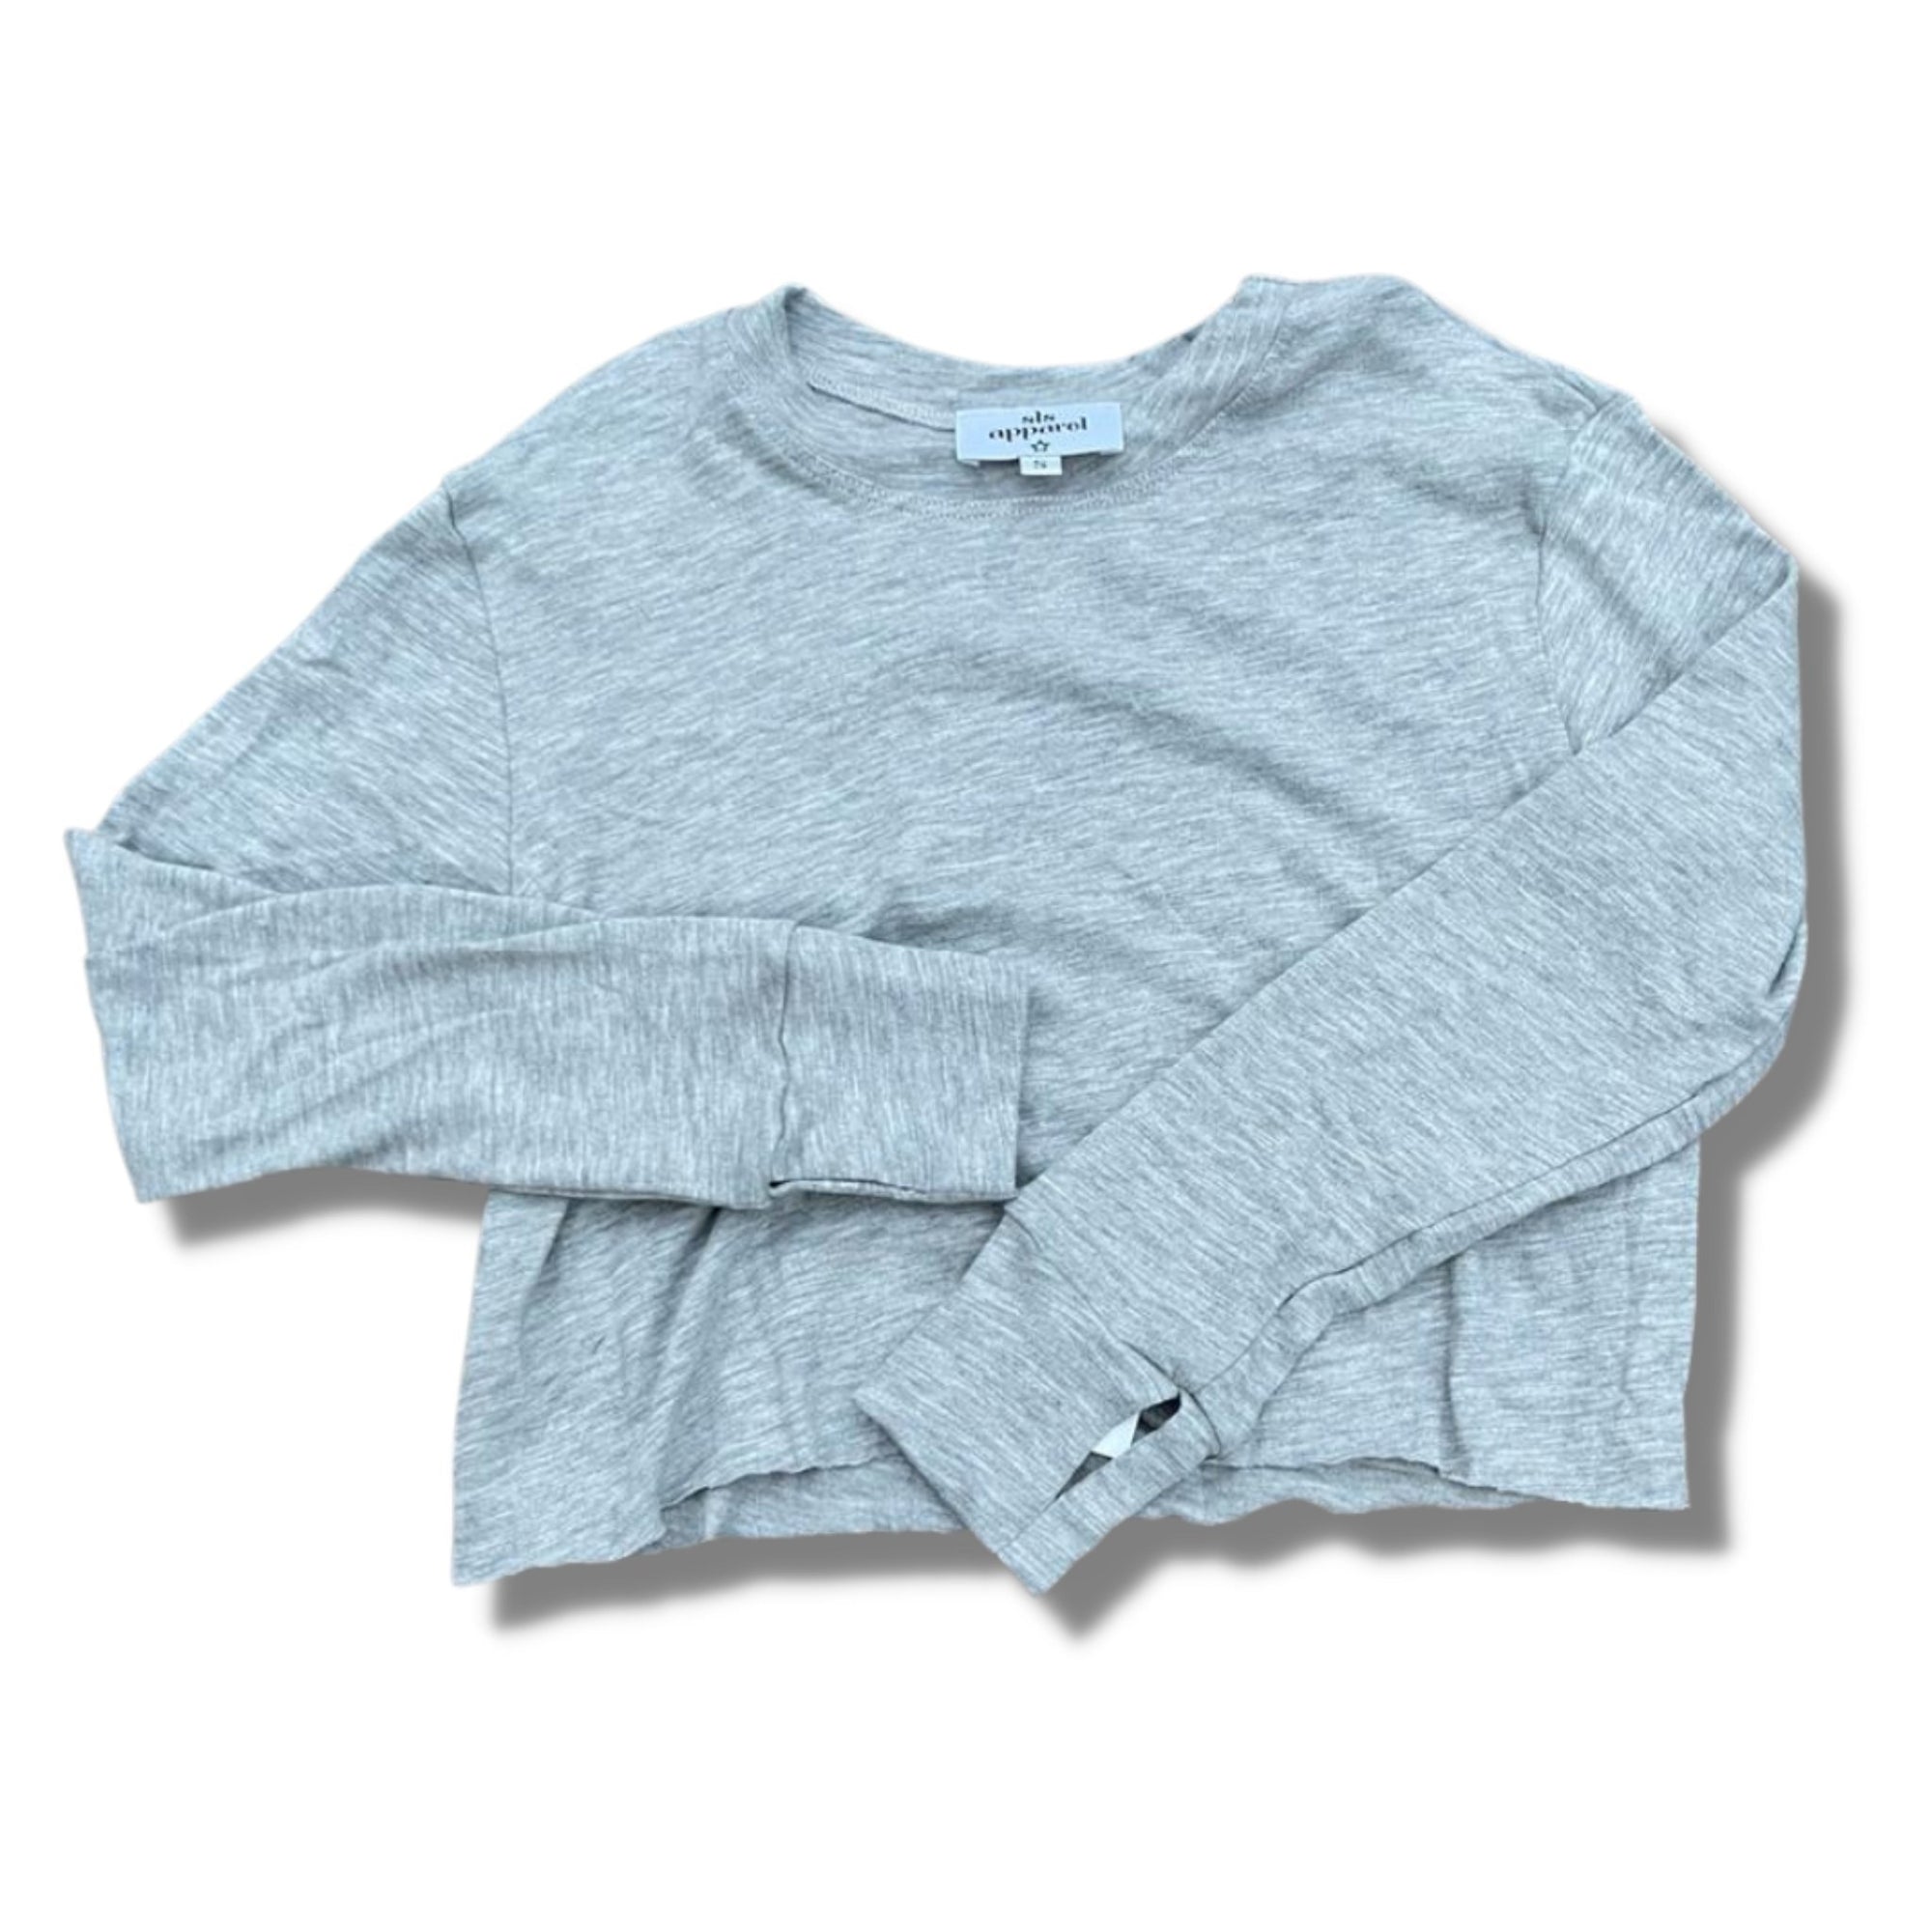 SLS Apparel Grey Crop Sweatshirt - a Spirit Animal - Sweatshirt $30-$45 apparel crop